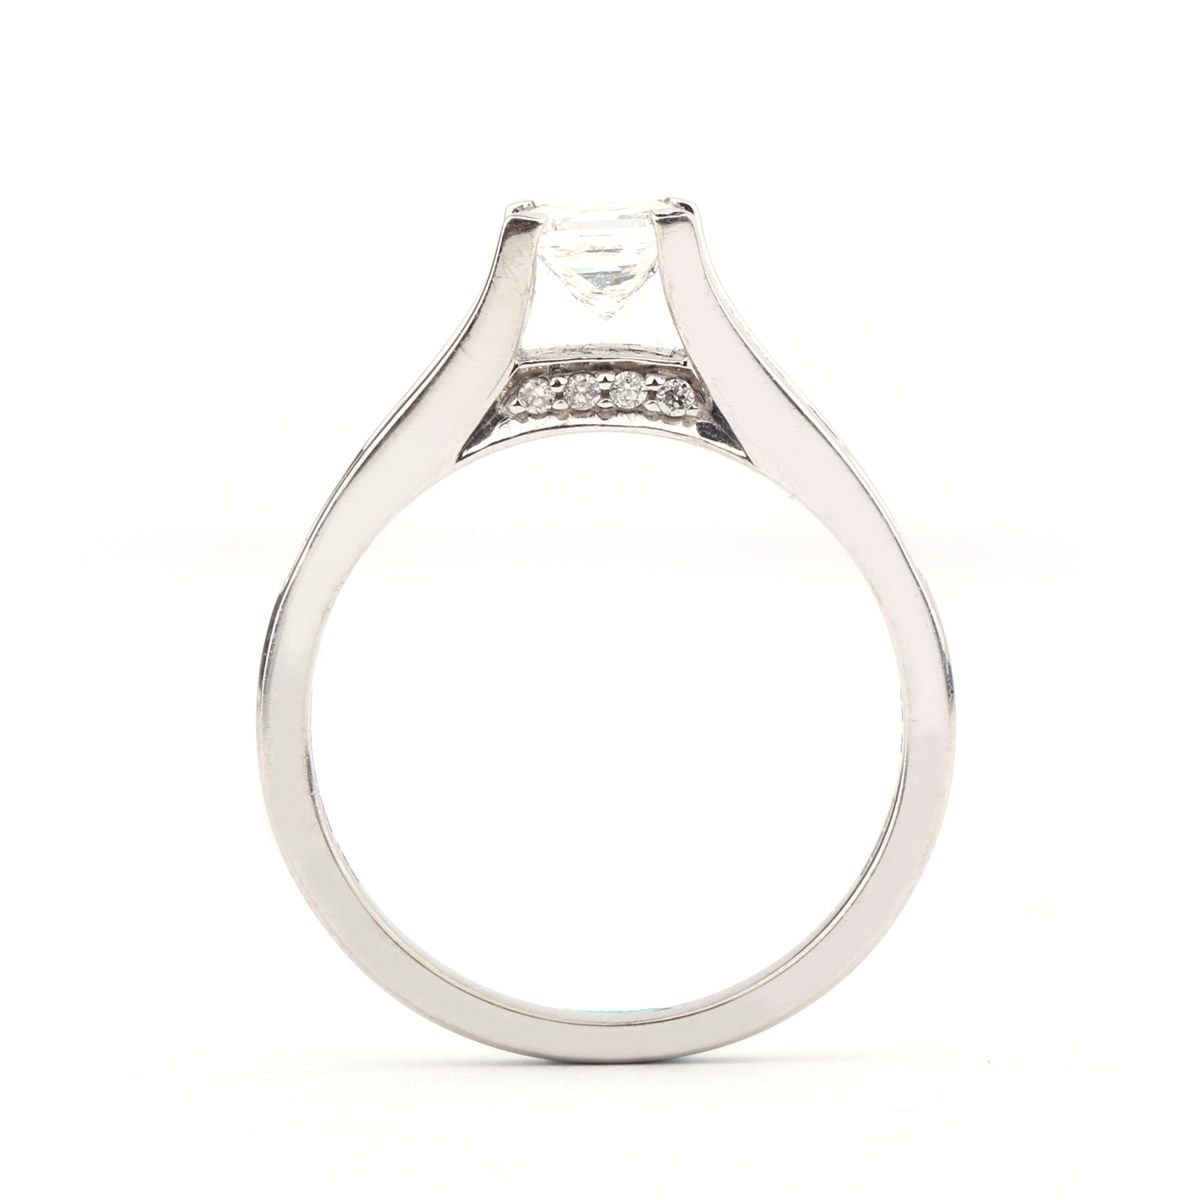  White Diamond Ring, 0.50 Carat, Princess shape